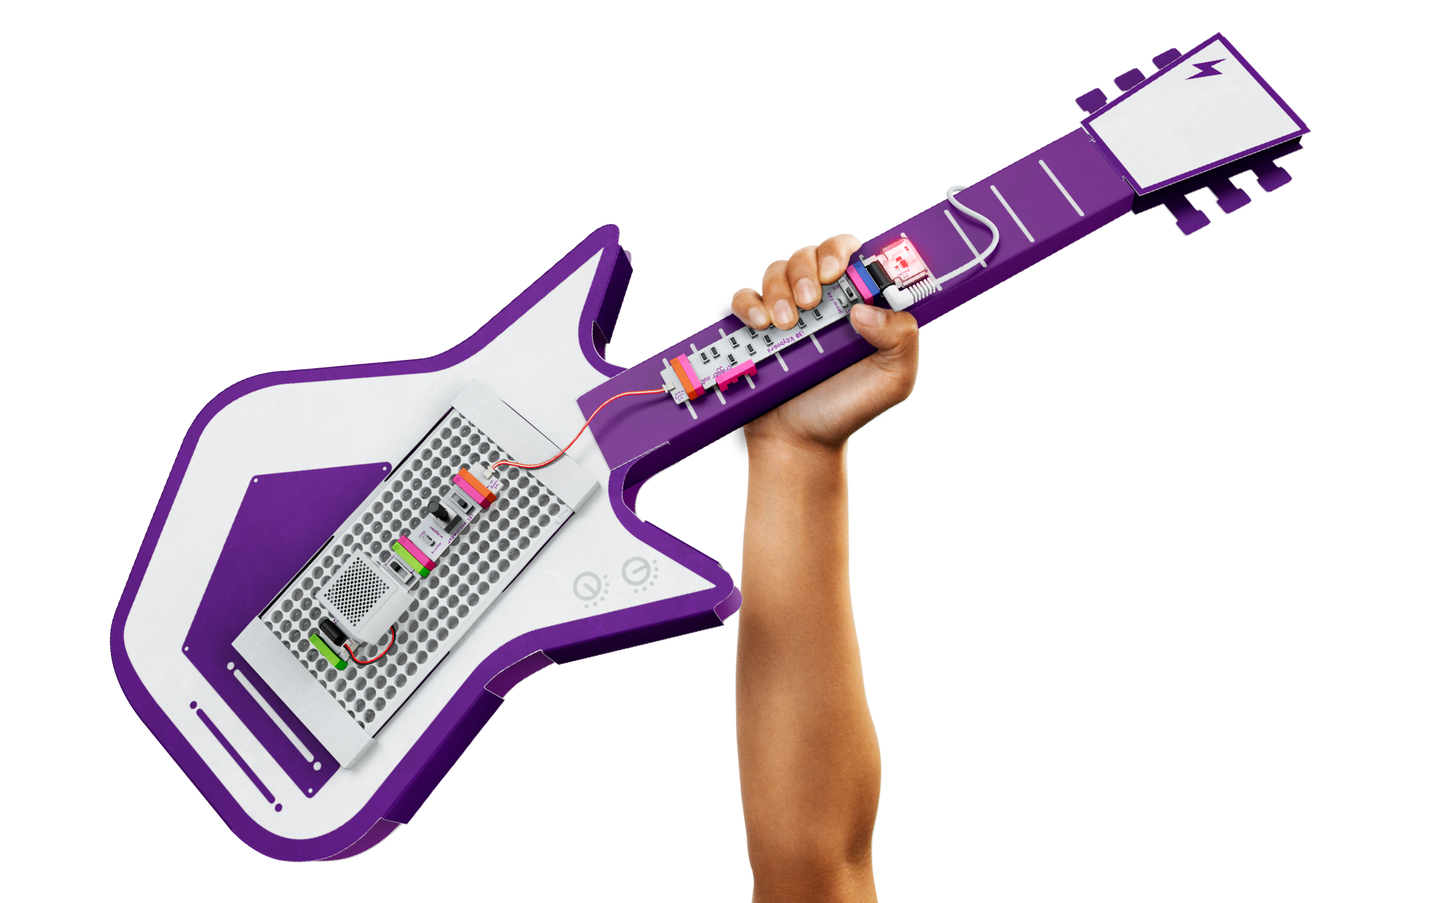 littleBits Electronic Music Inventor Kit